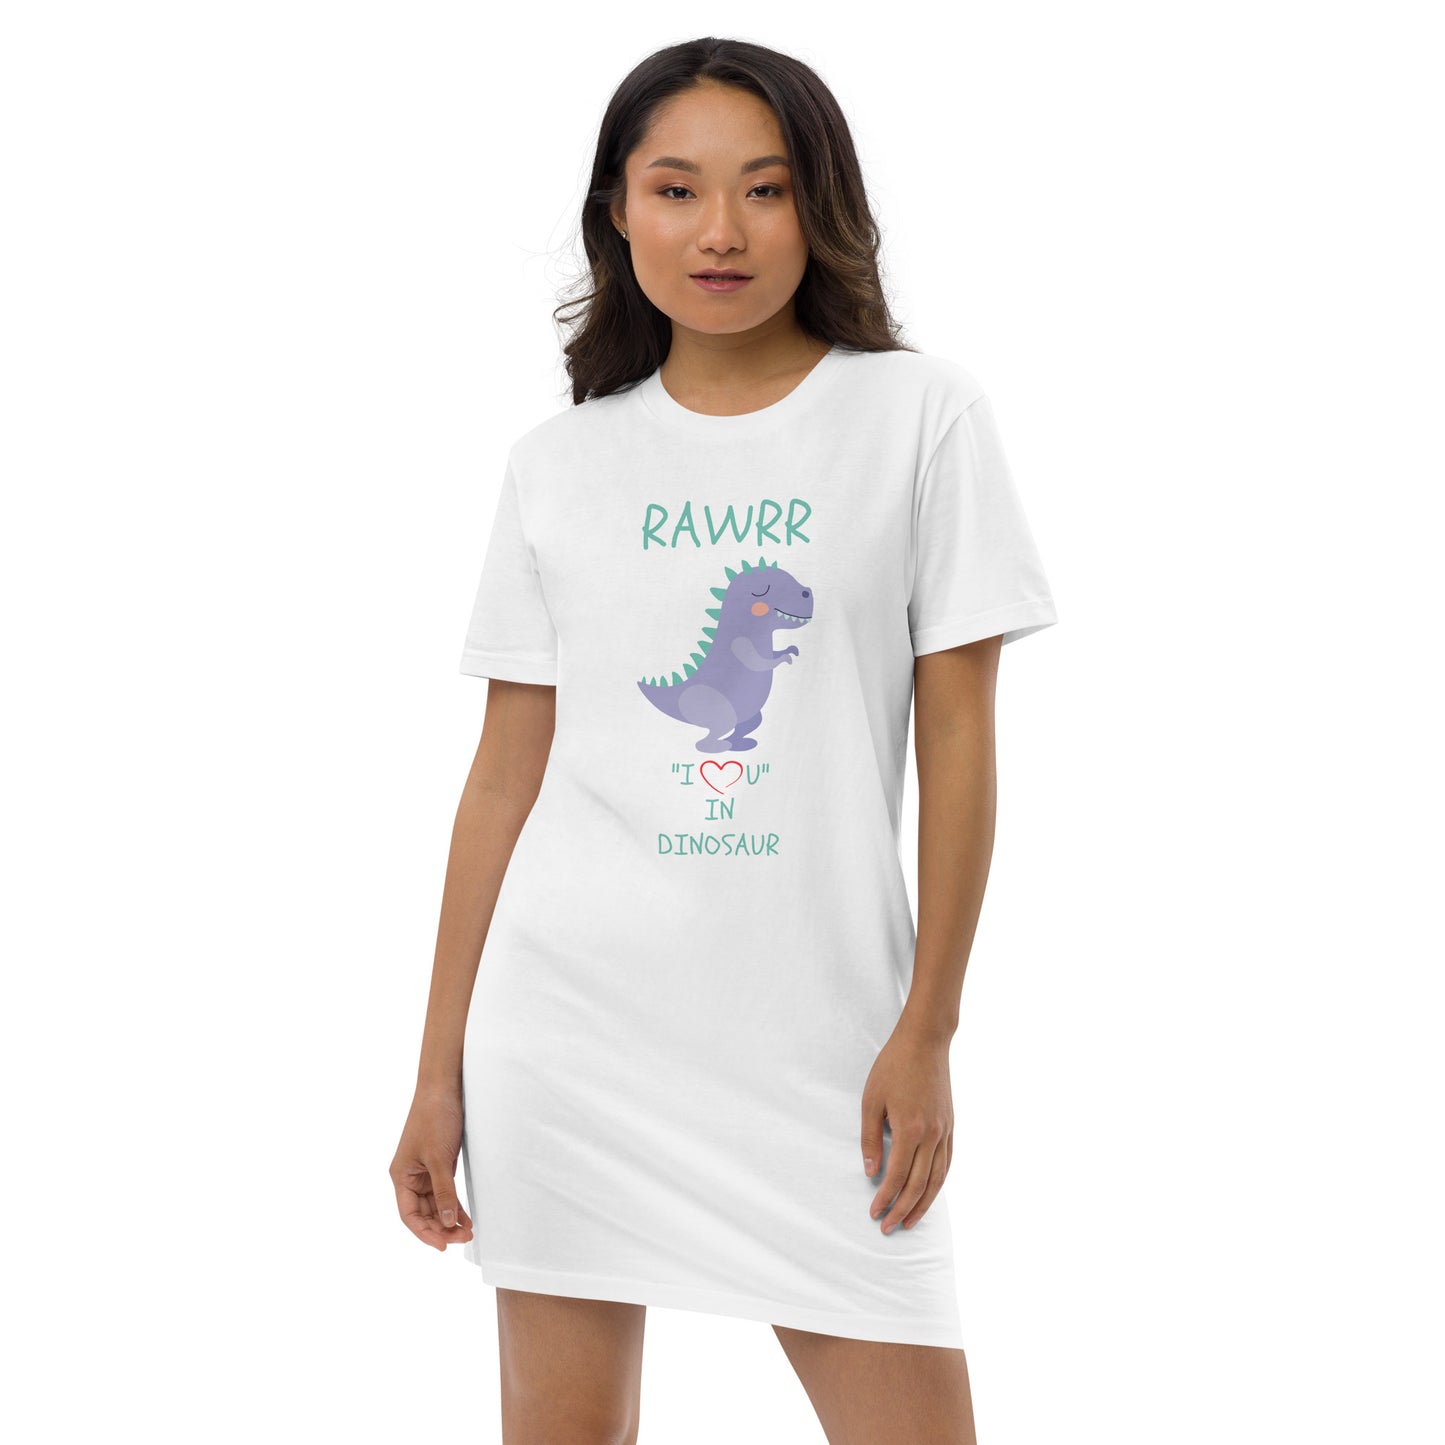 RAWRR "I Love You" In Dinosaur Organic cotton t-shirt dress